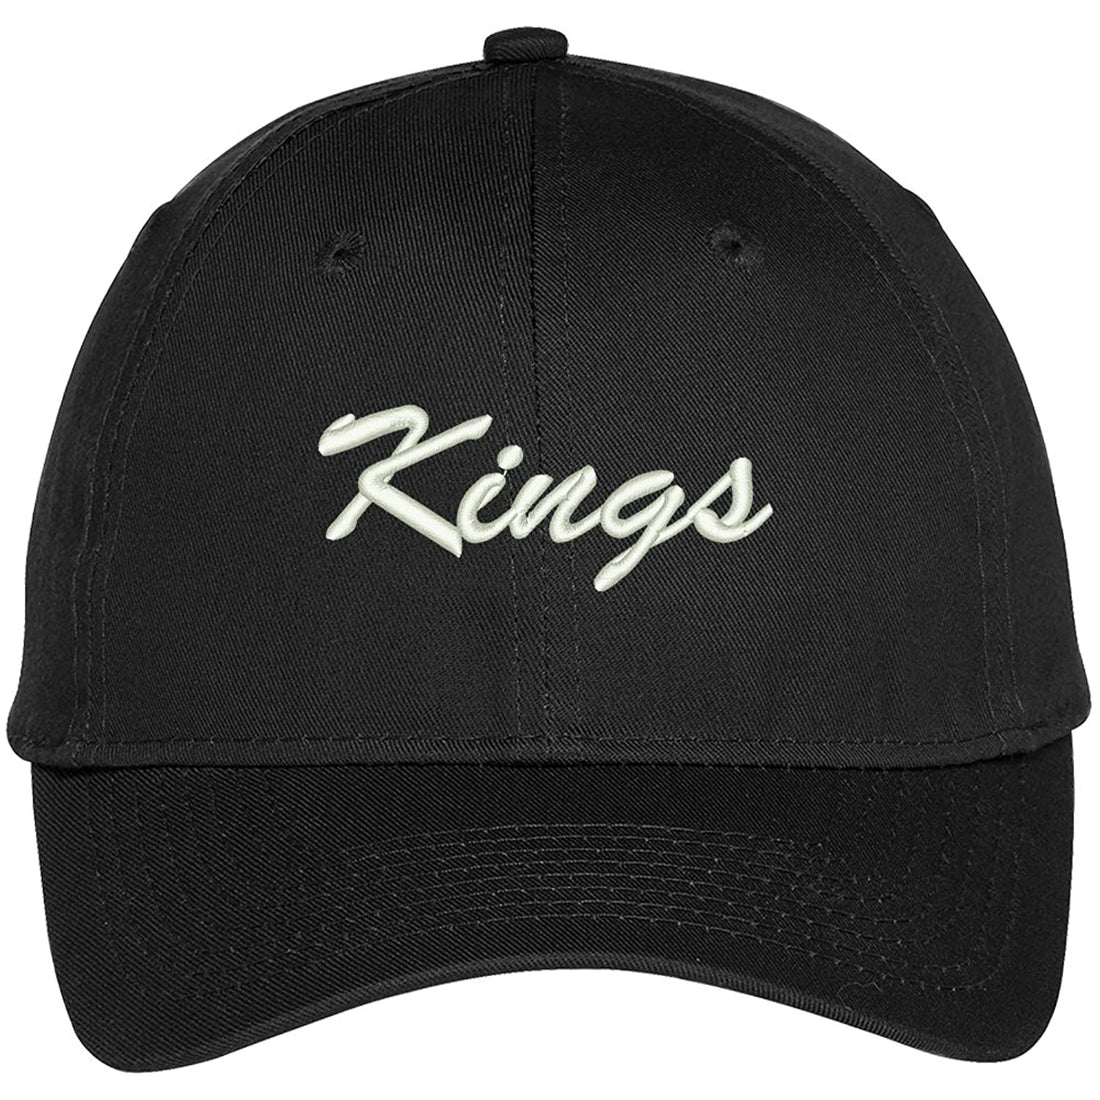 Trendy Apparel Shop Kings Embroidered Precurved Adjustable Cap